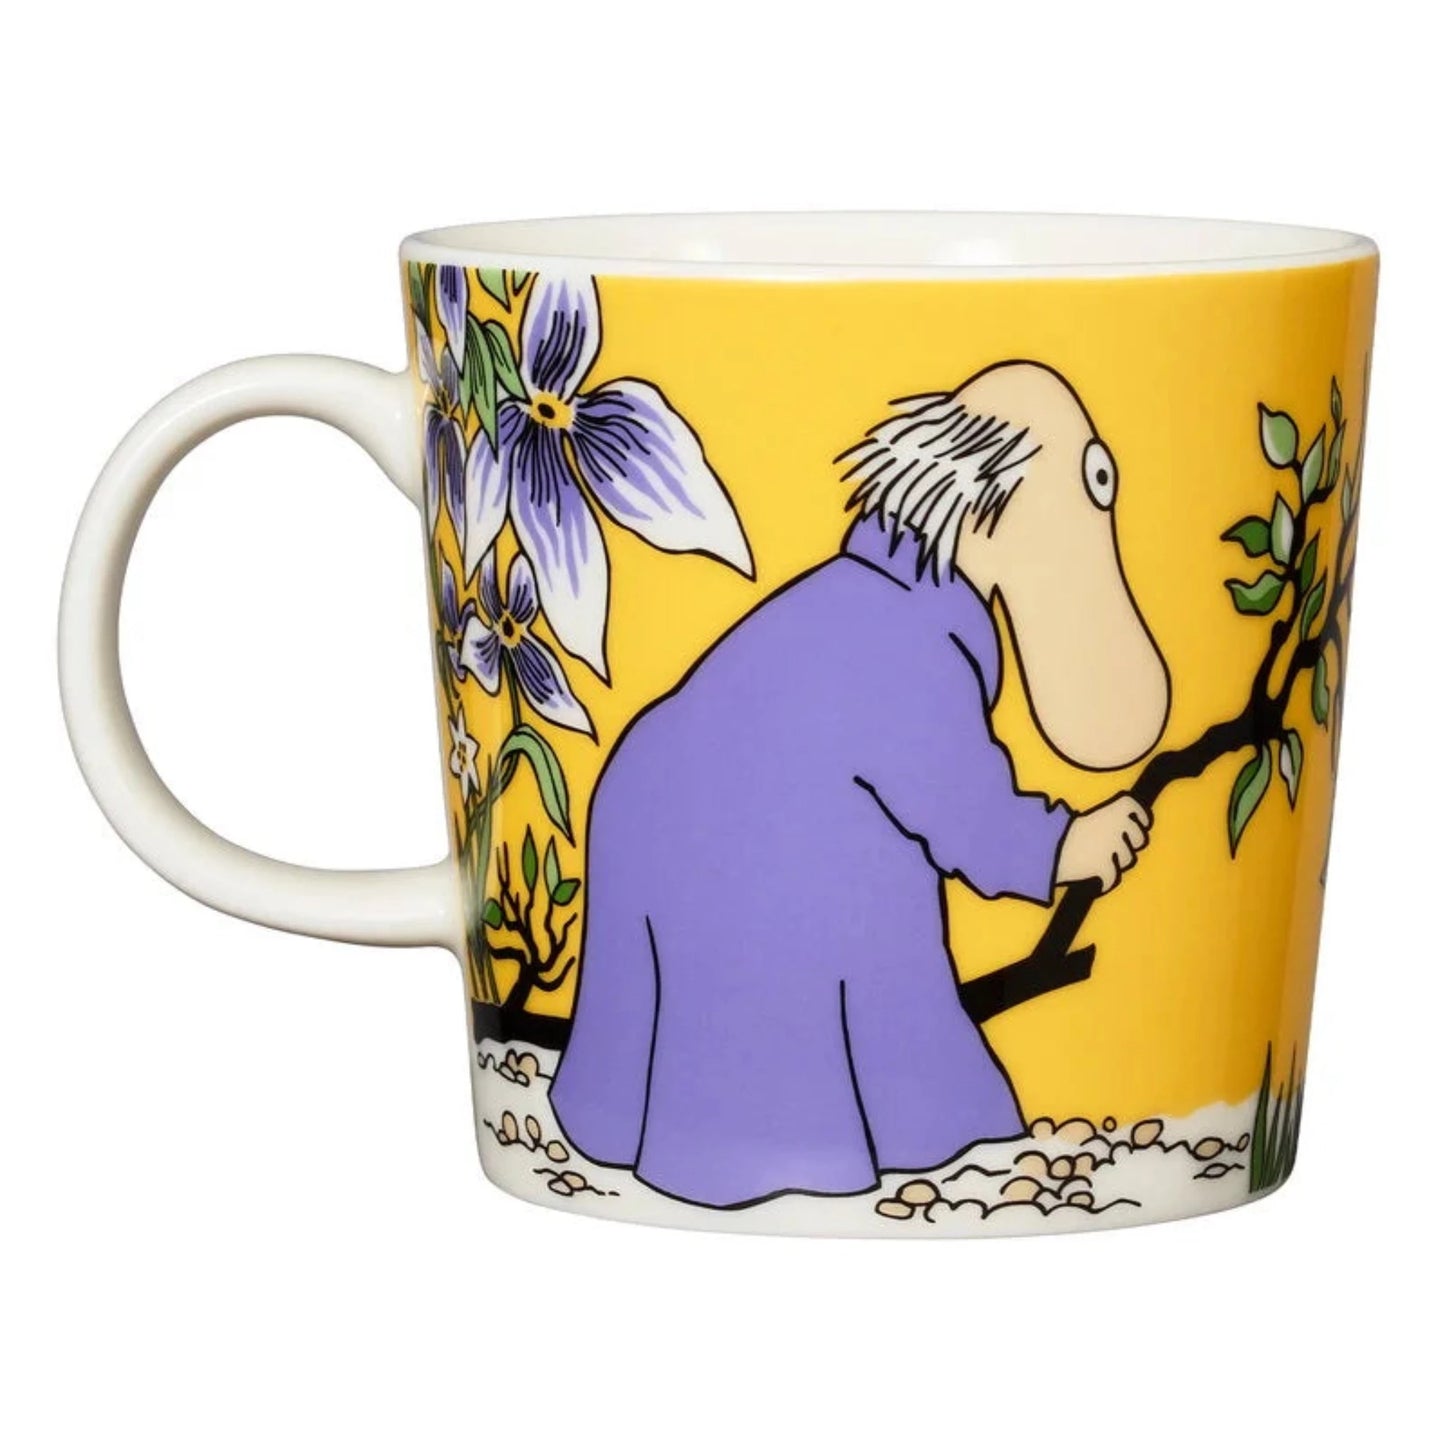 Moomin Mug by Arabia, Hemulen (8766391845151)